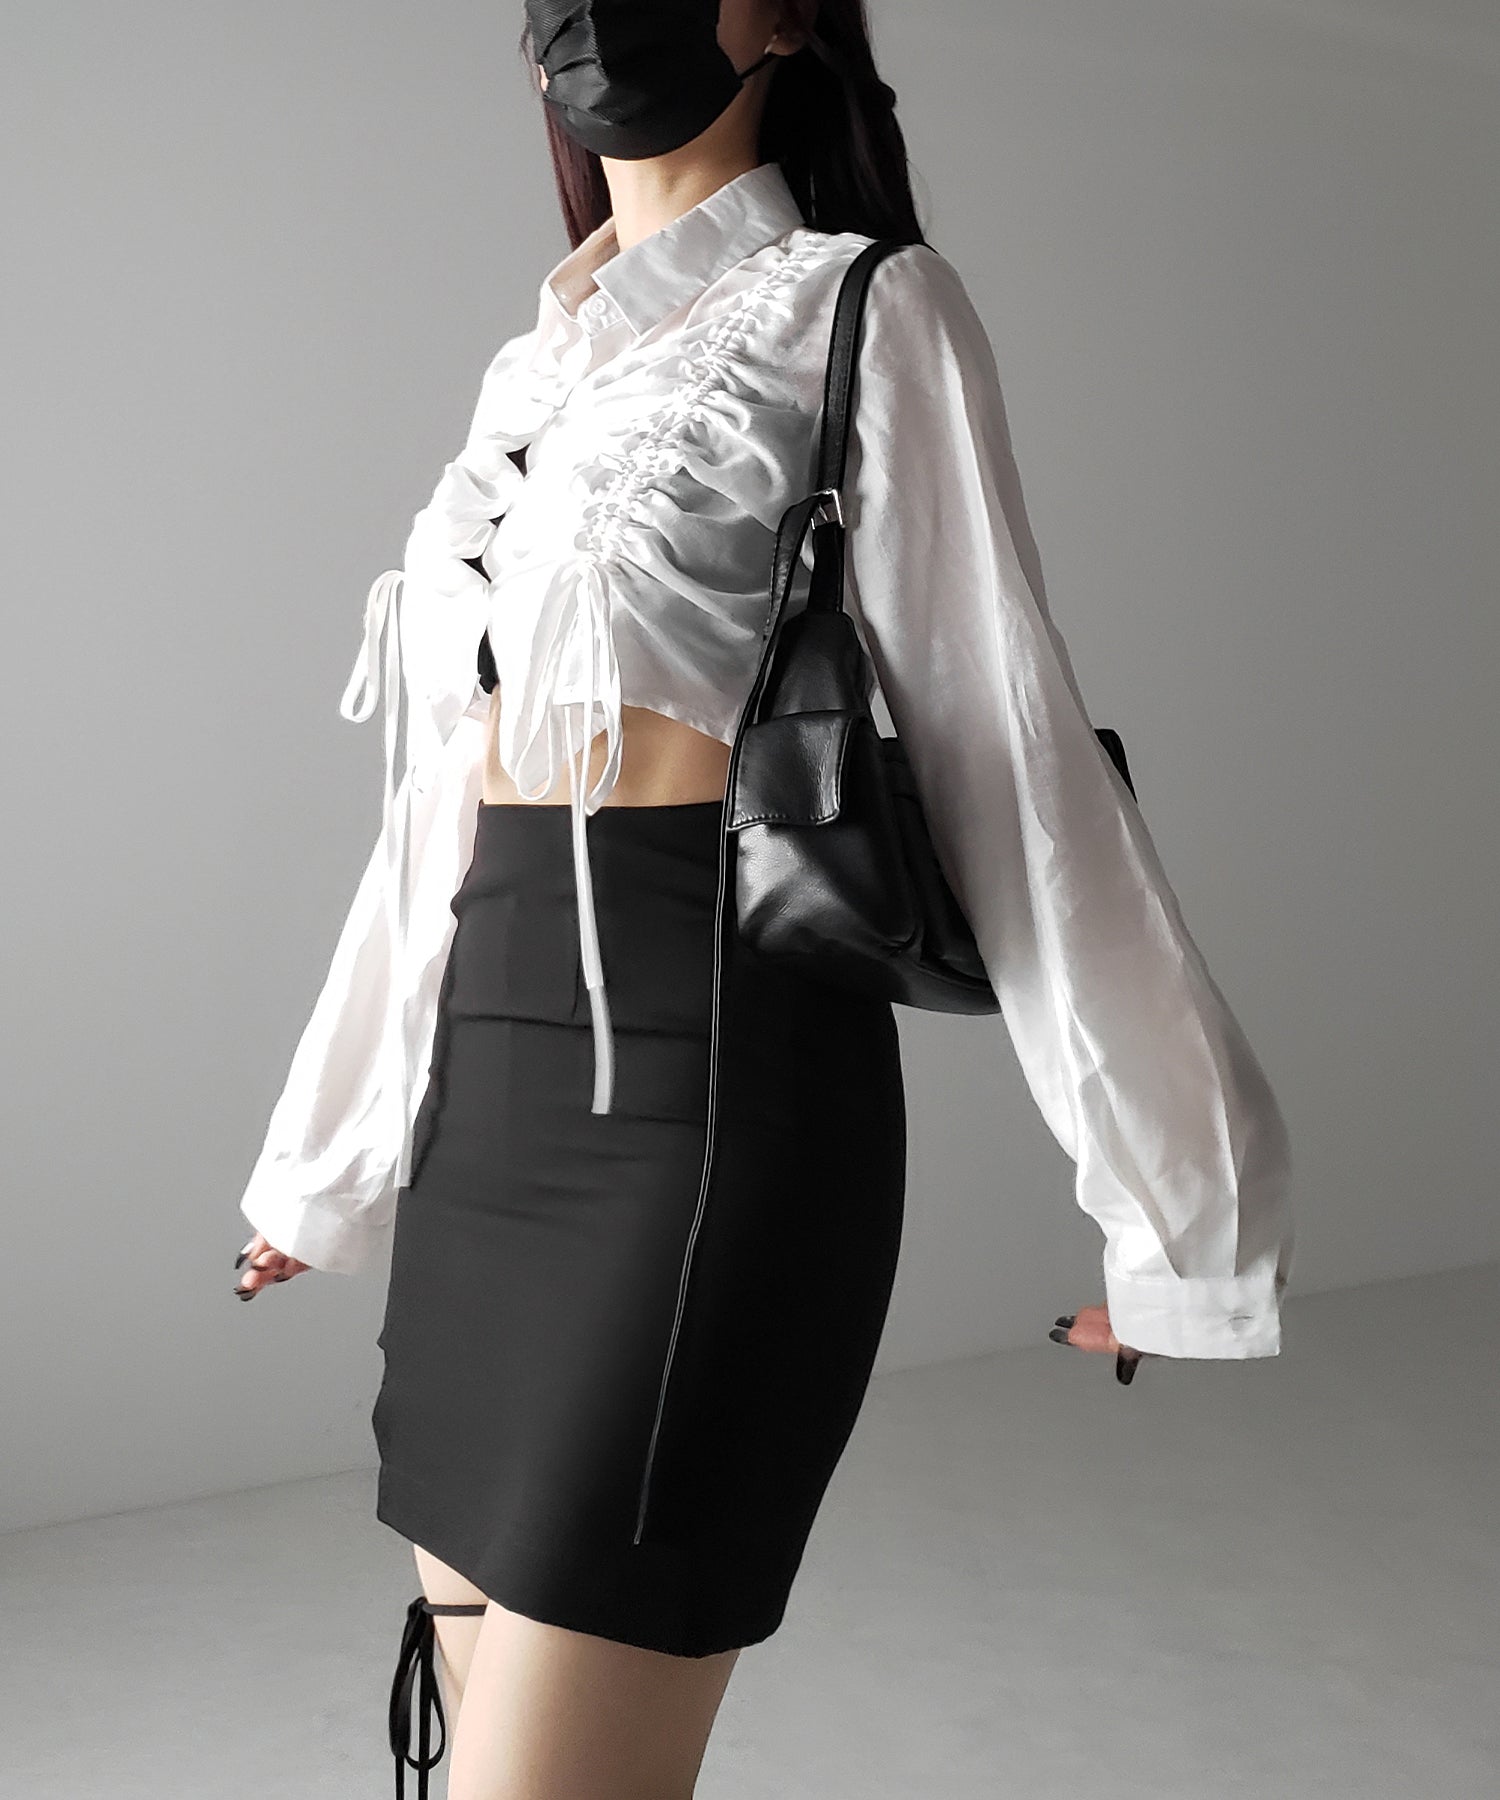 【 ２color 】クロスストラップサイドリボンミニスカート ／ cross strap side ribbon mini skirt